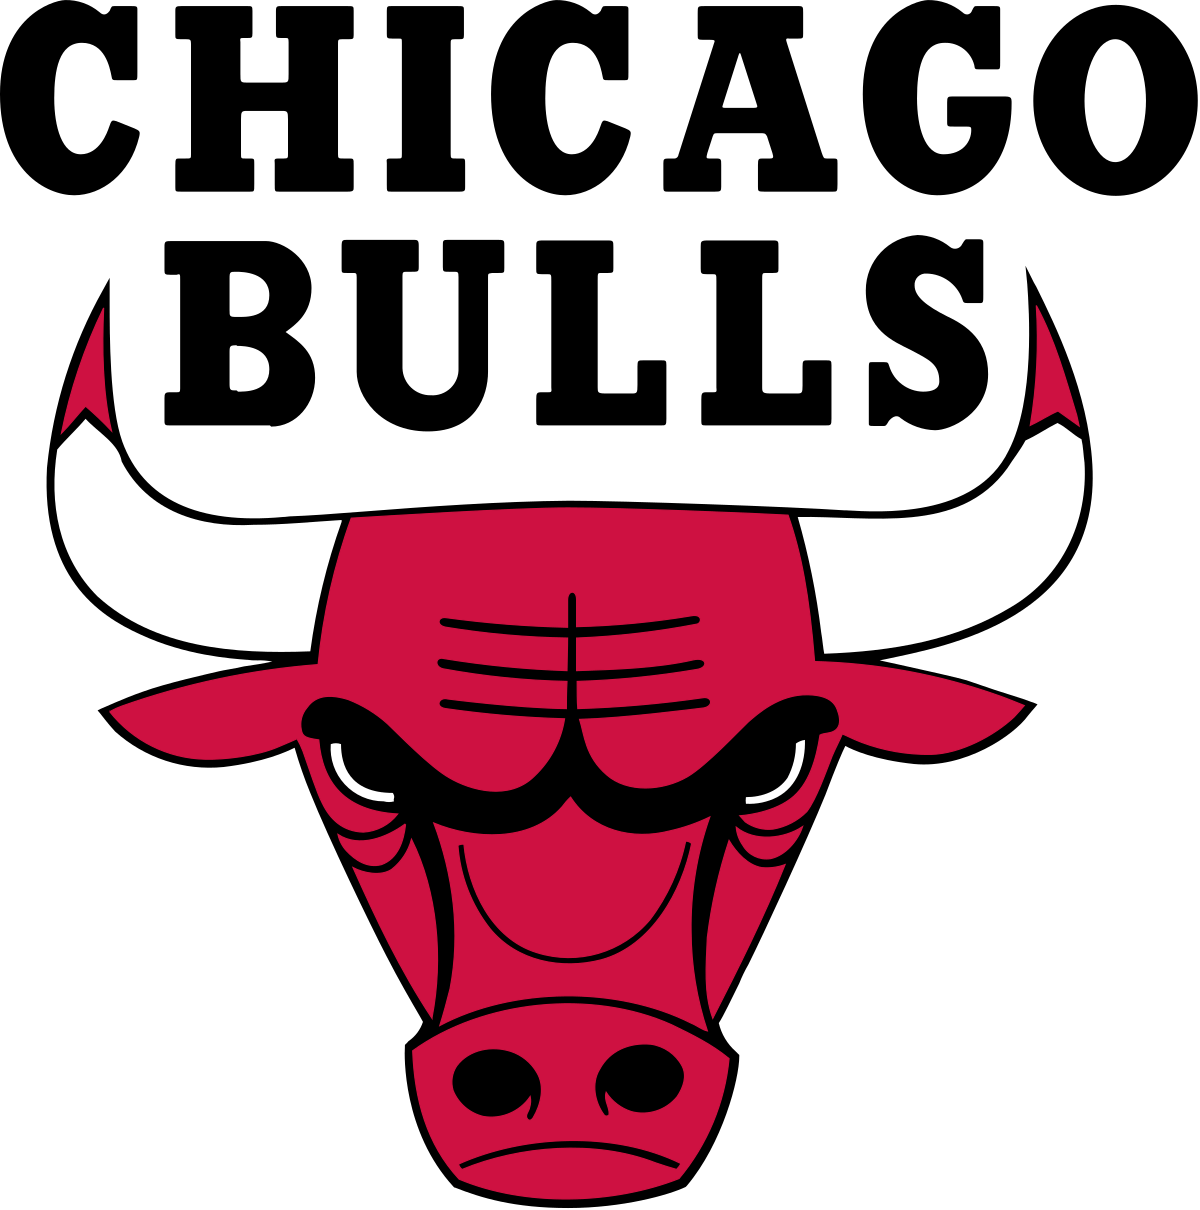 Chicago Bulls Logo - Chicago Bulls